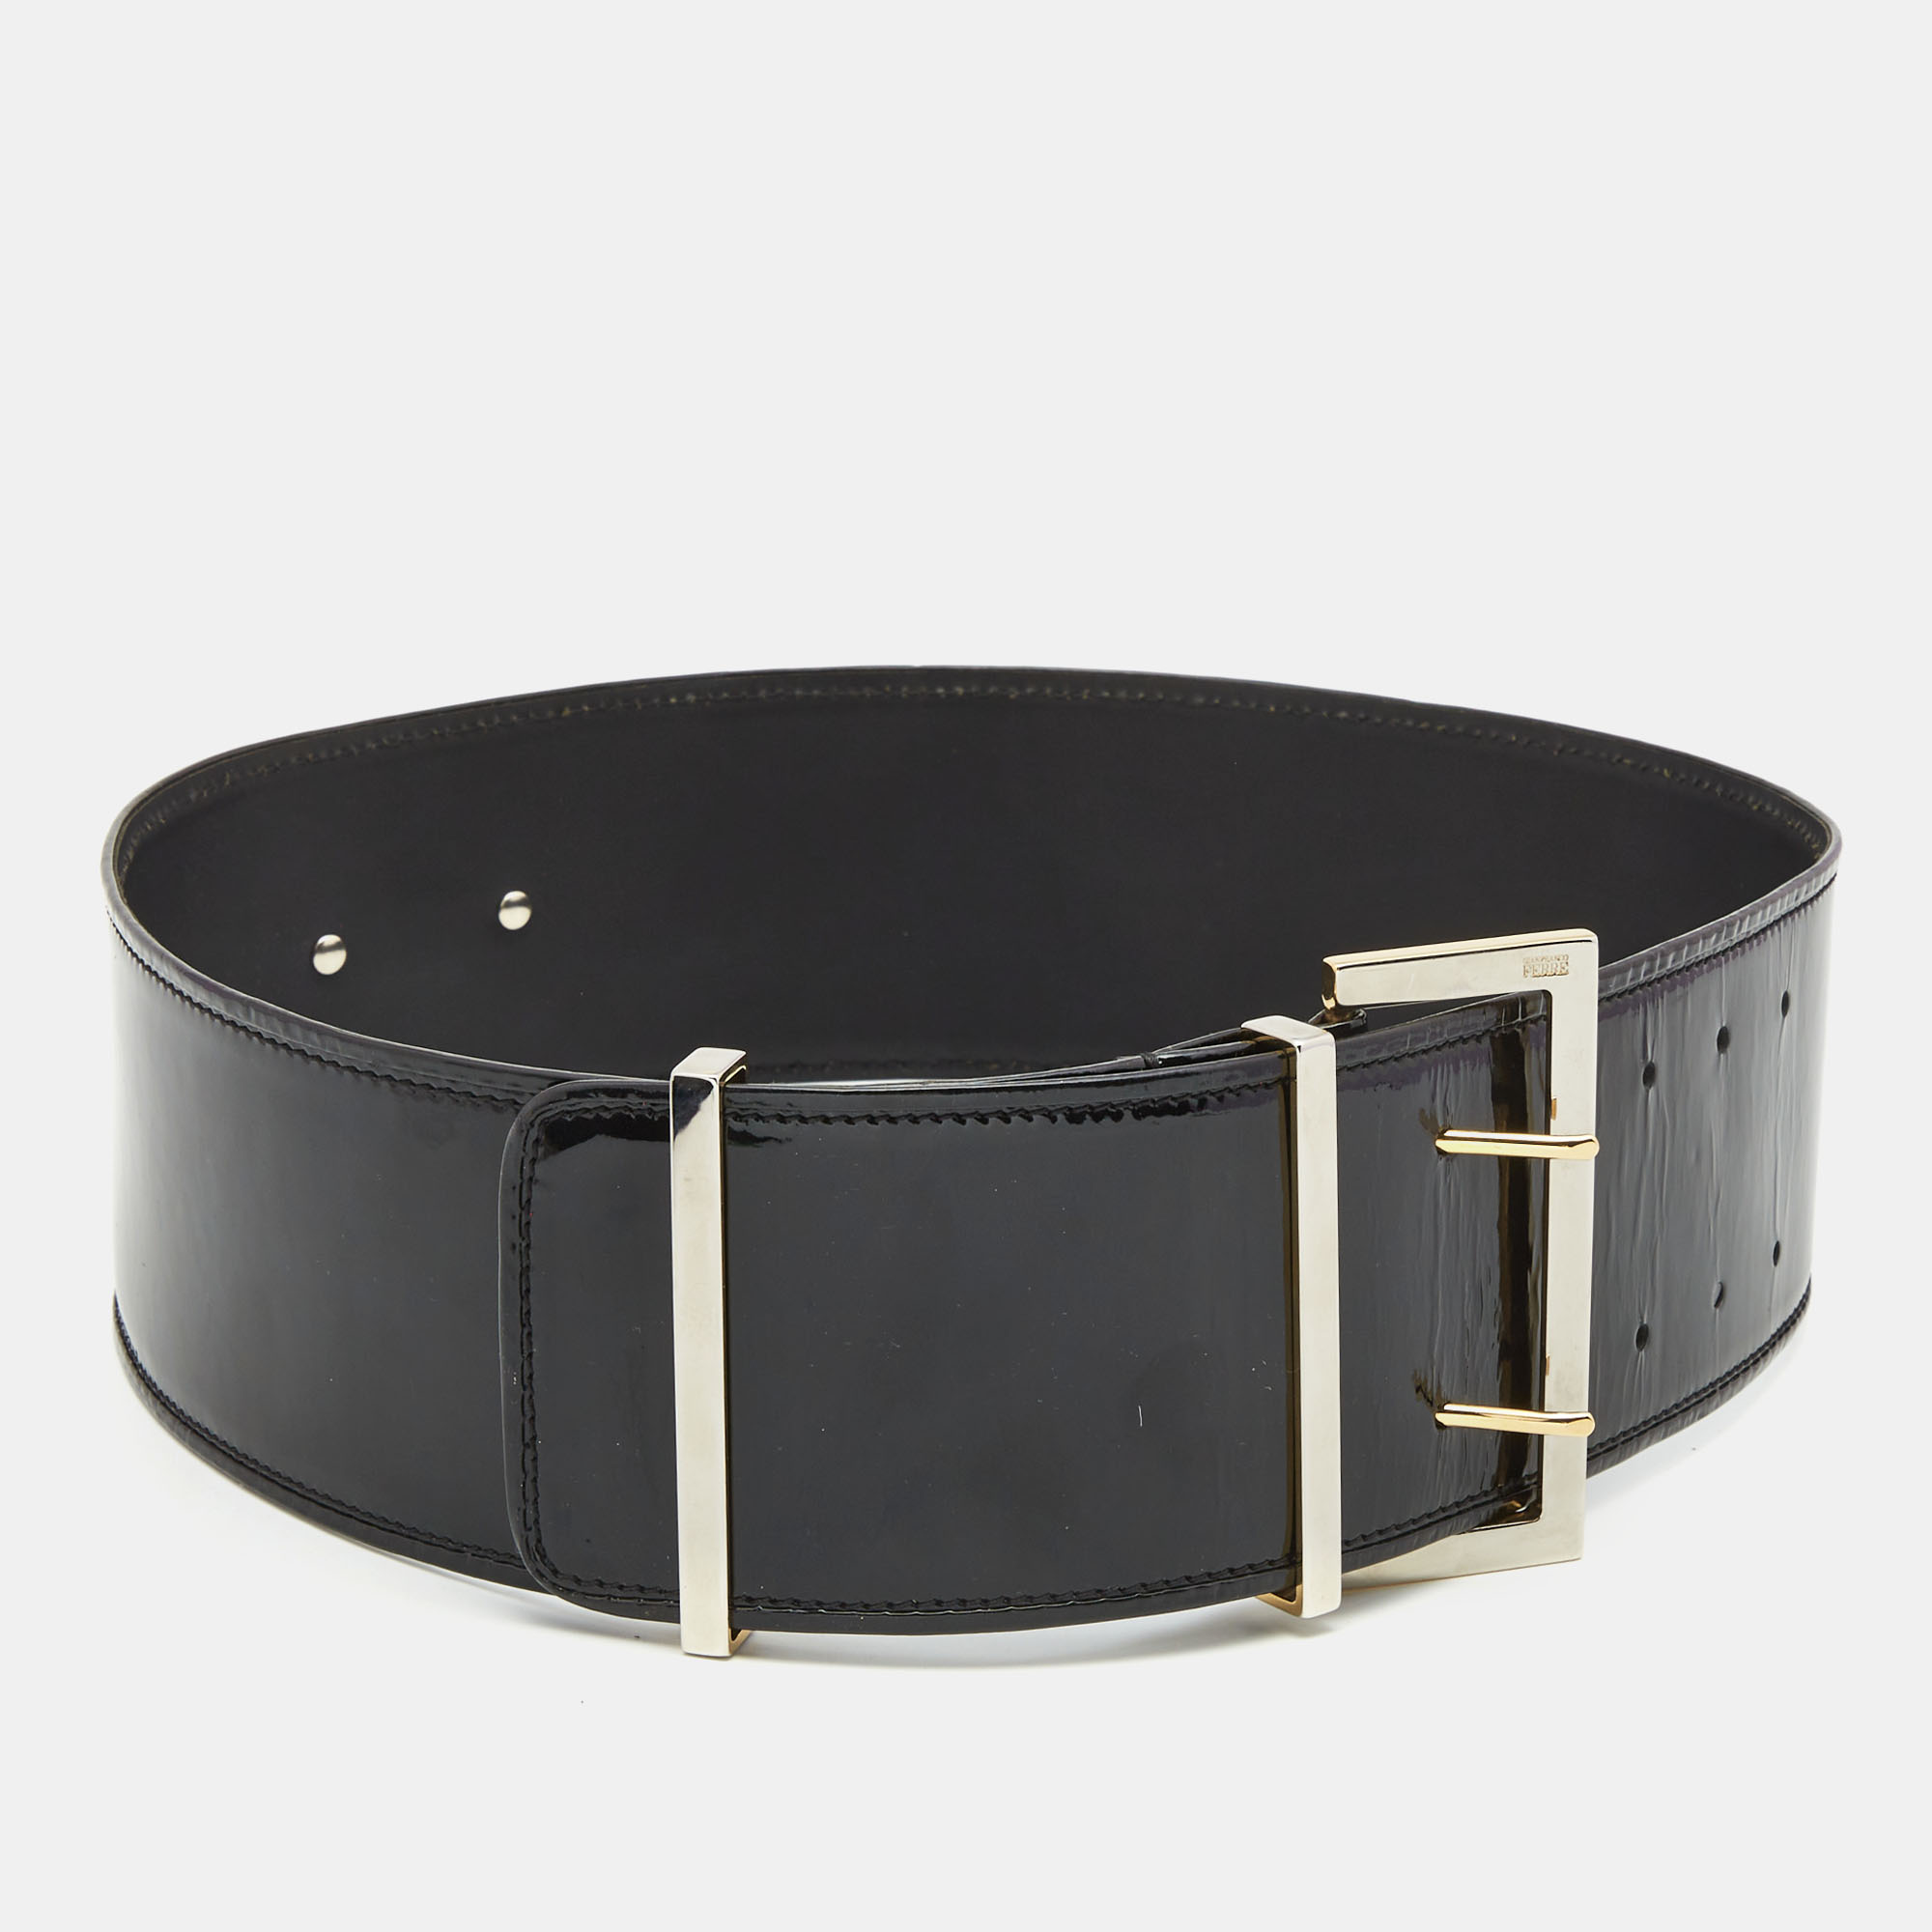 Gianfranco ferre black patent leather buckle wide belt 95cm